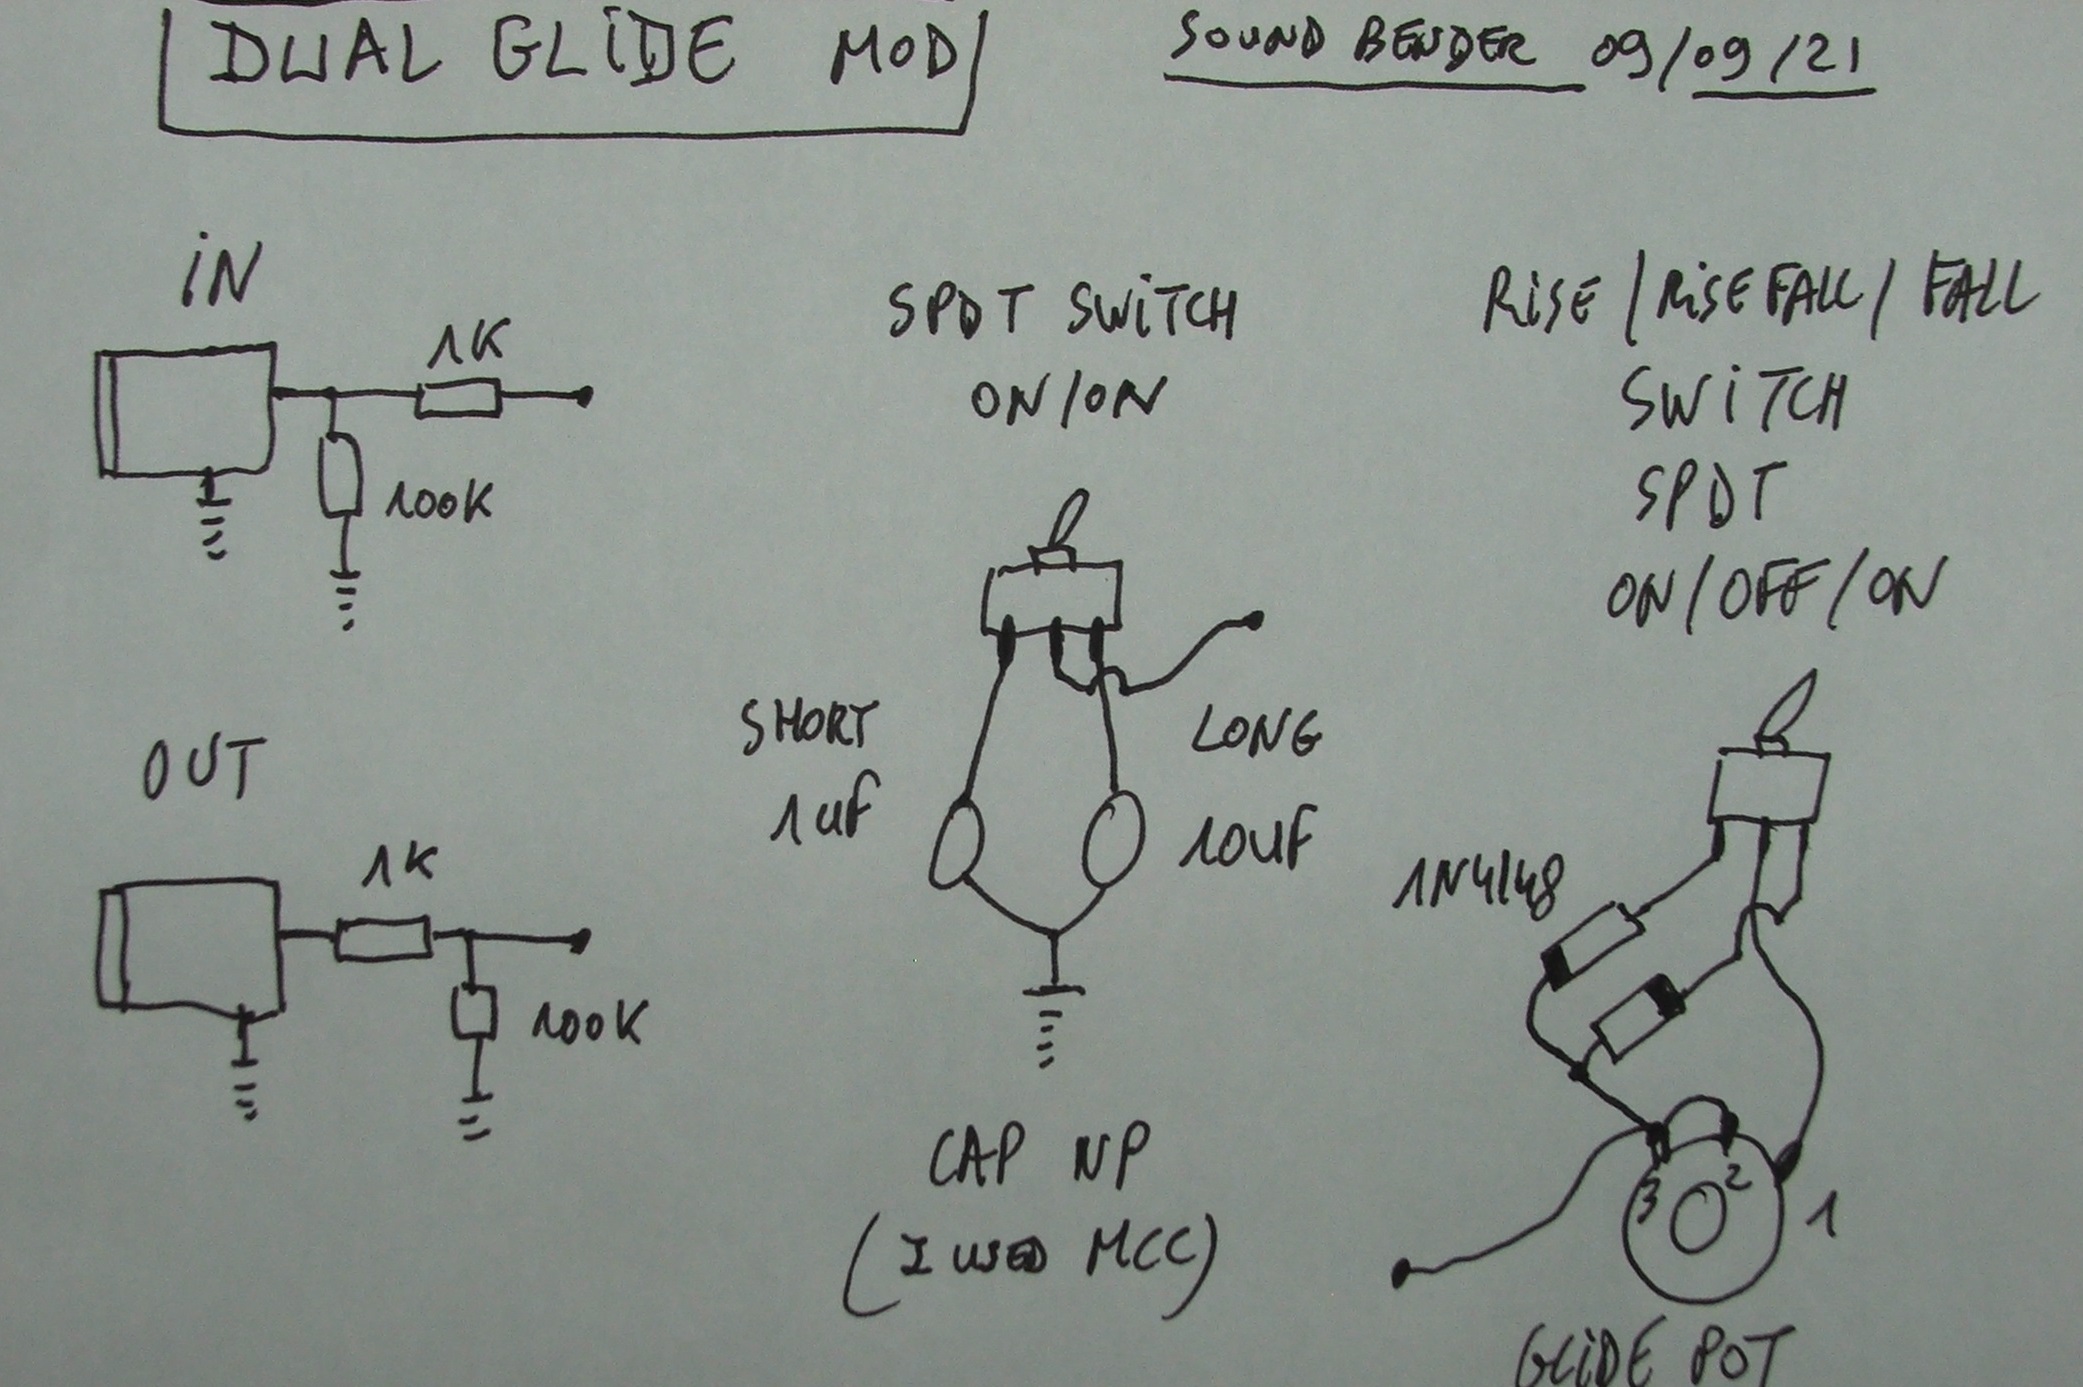 dual-glide-mod-sound-bender-2